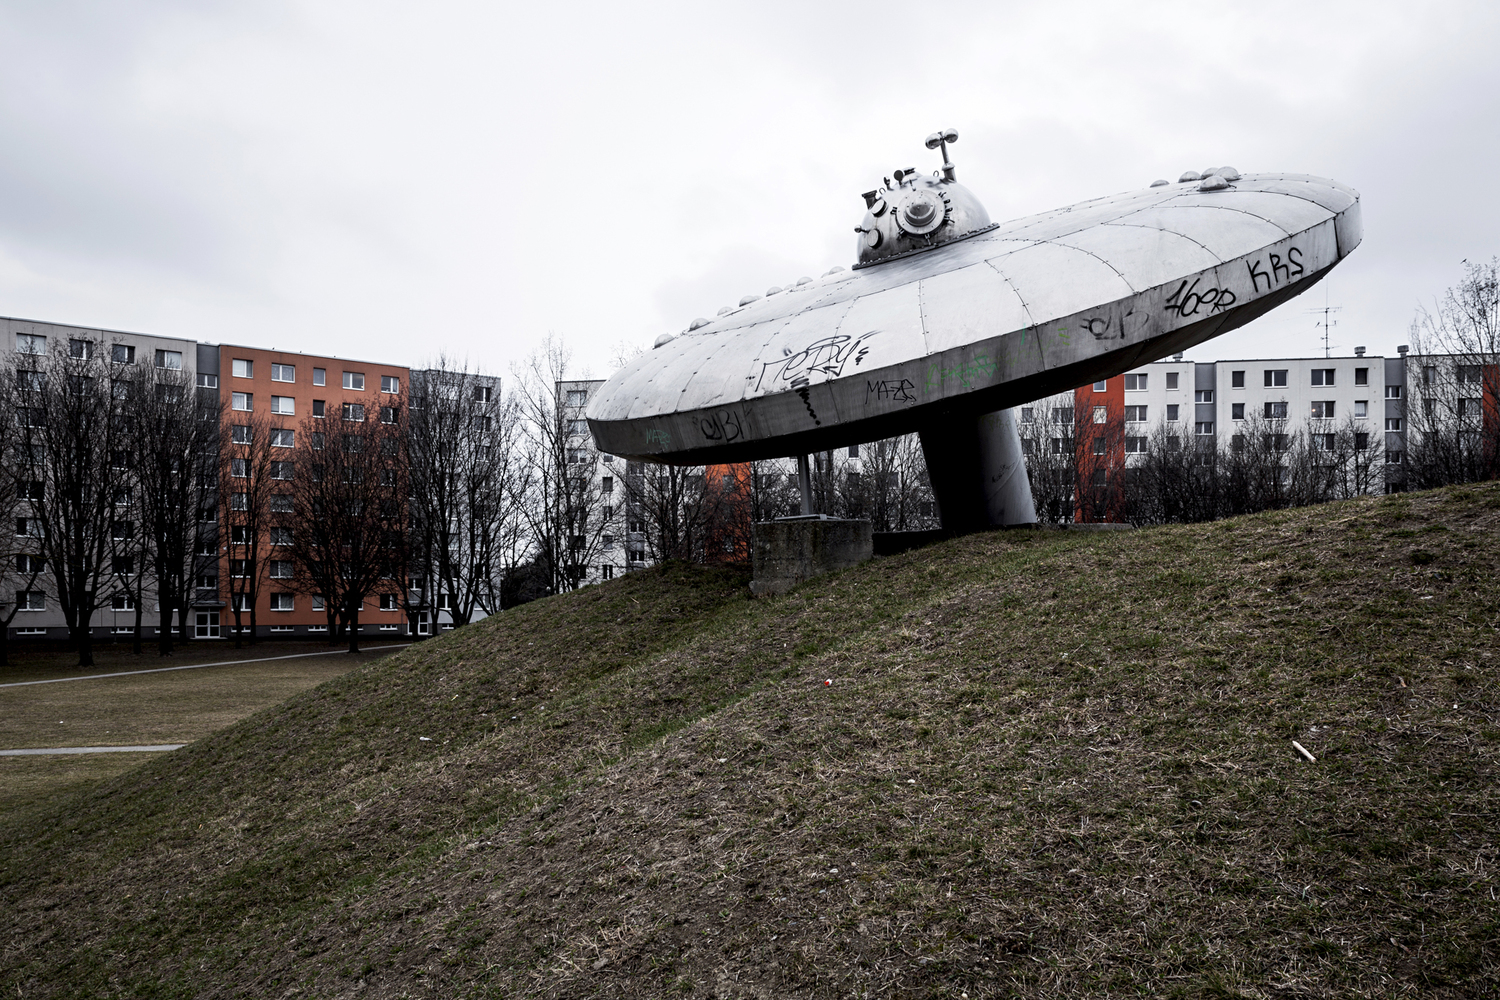 "UFO", by sculptor Juraj Hovorka, 1979. Restored in 2014. Bratislava, Slovakia. Image: Stefano Perego